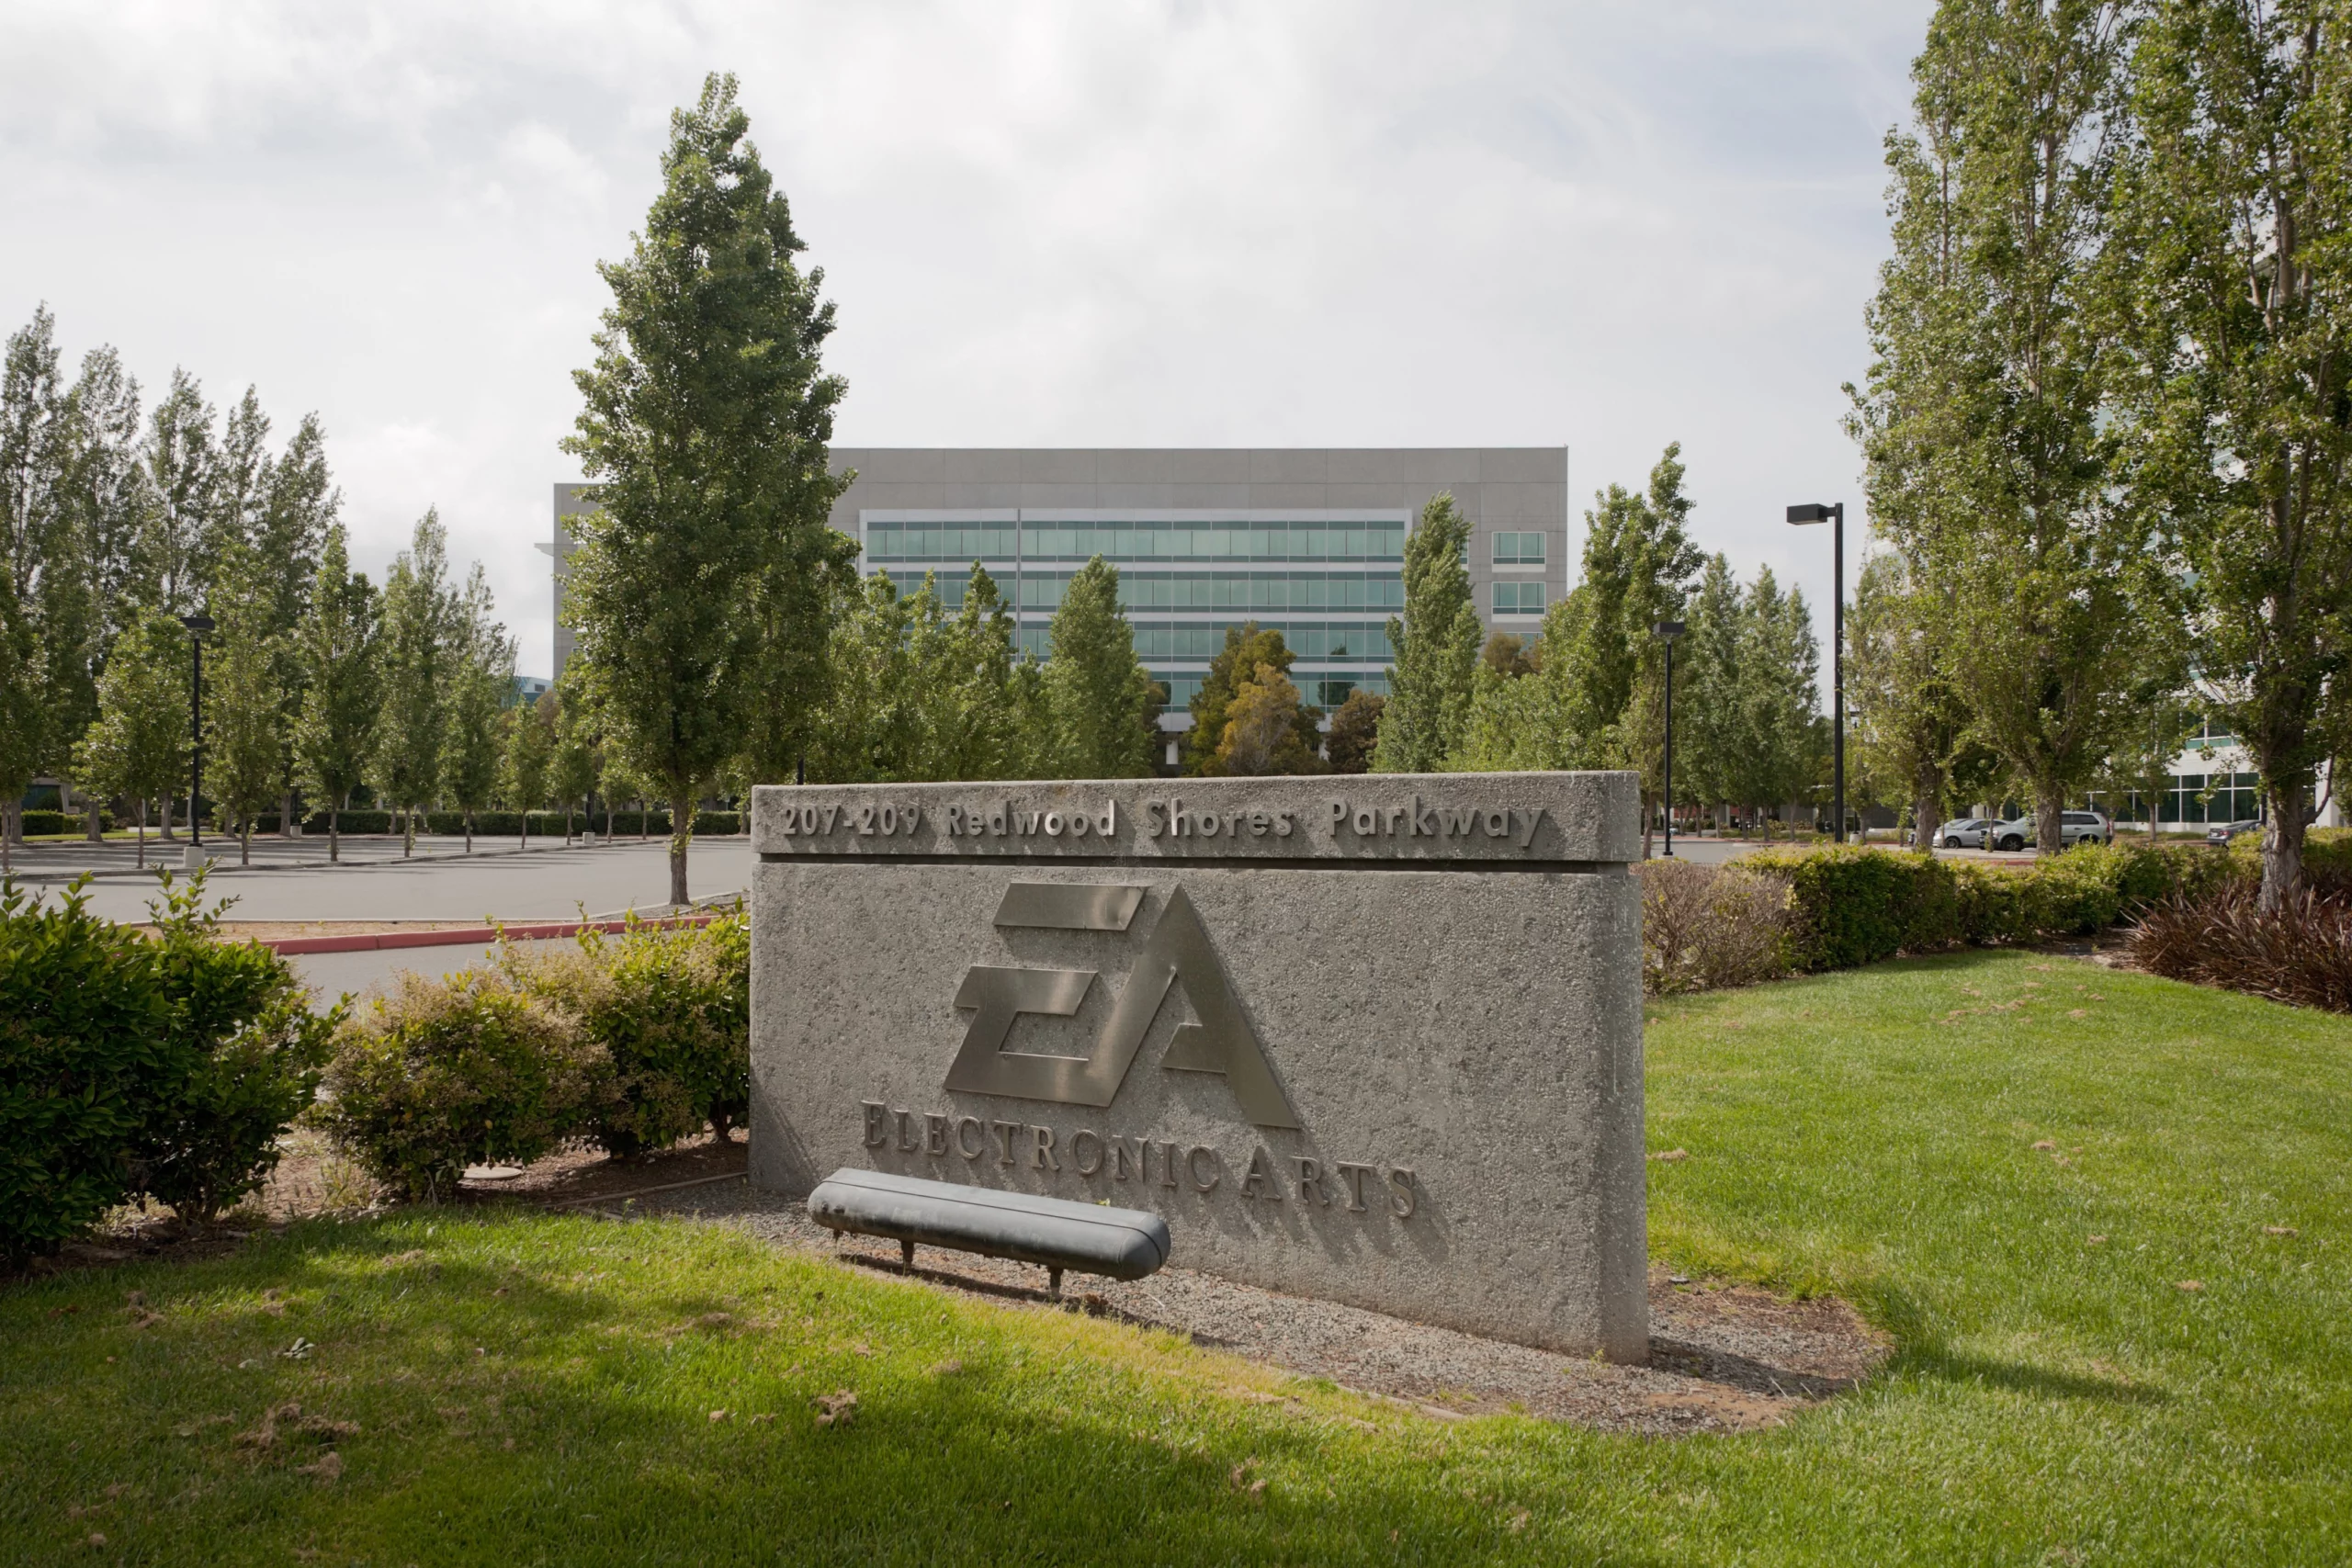 Electronic Arts Redwood City May scaled jpeg